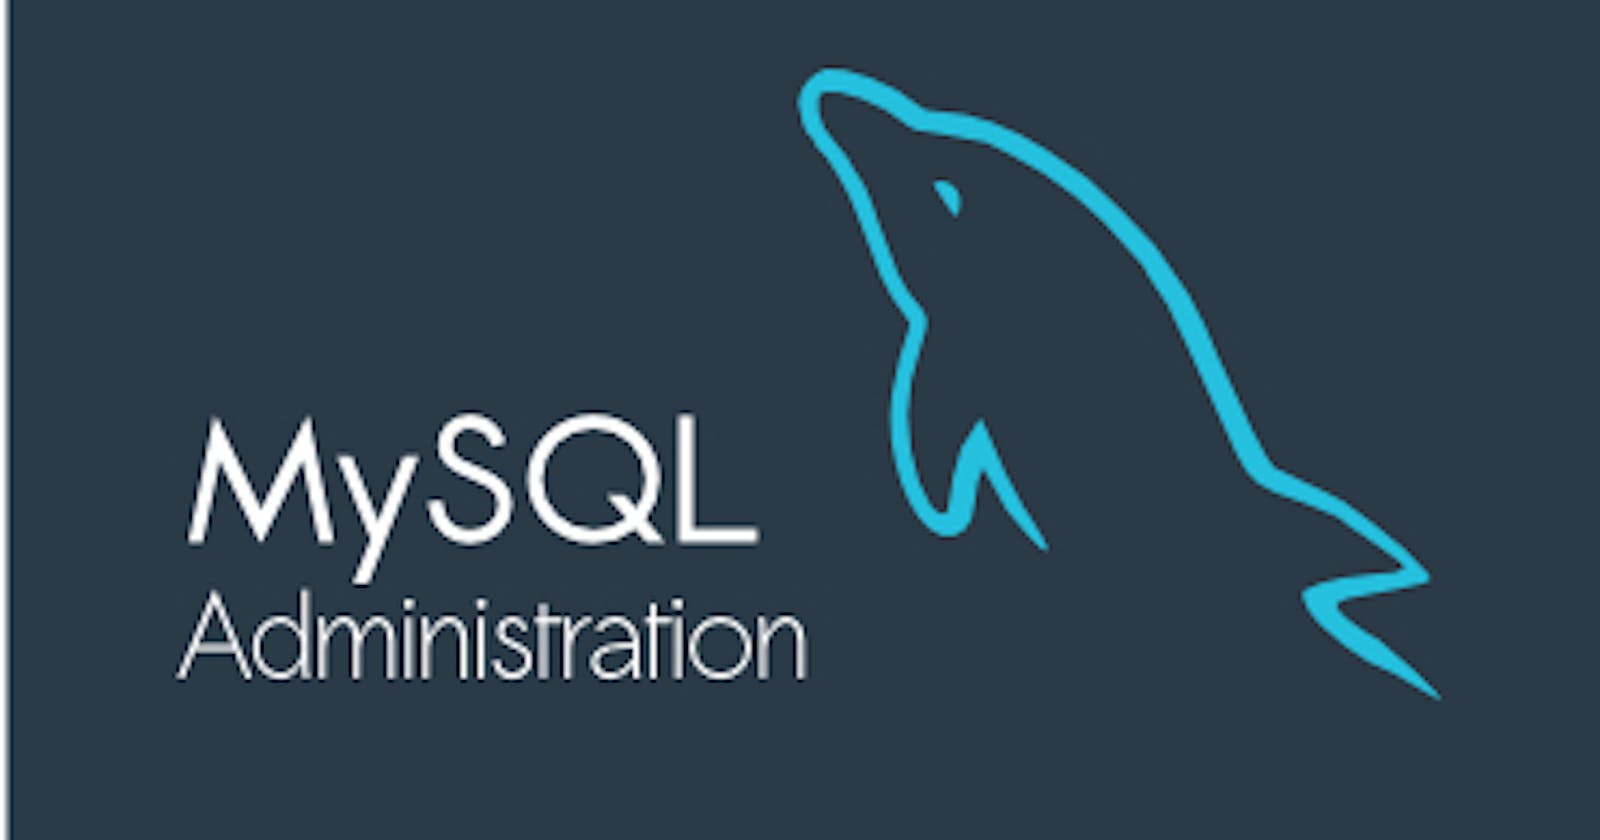 MySQL Administration - Export via Command Line